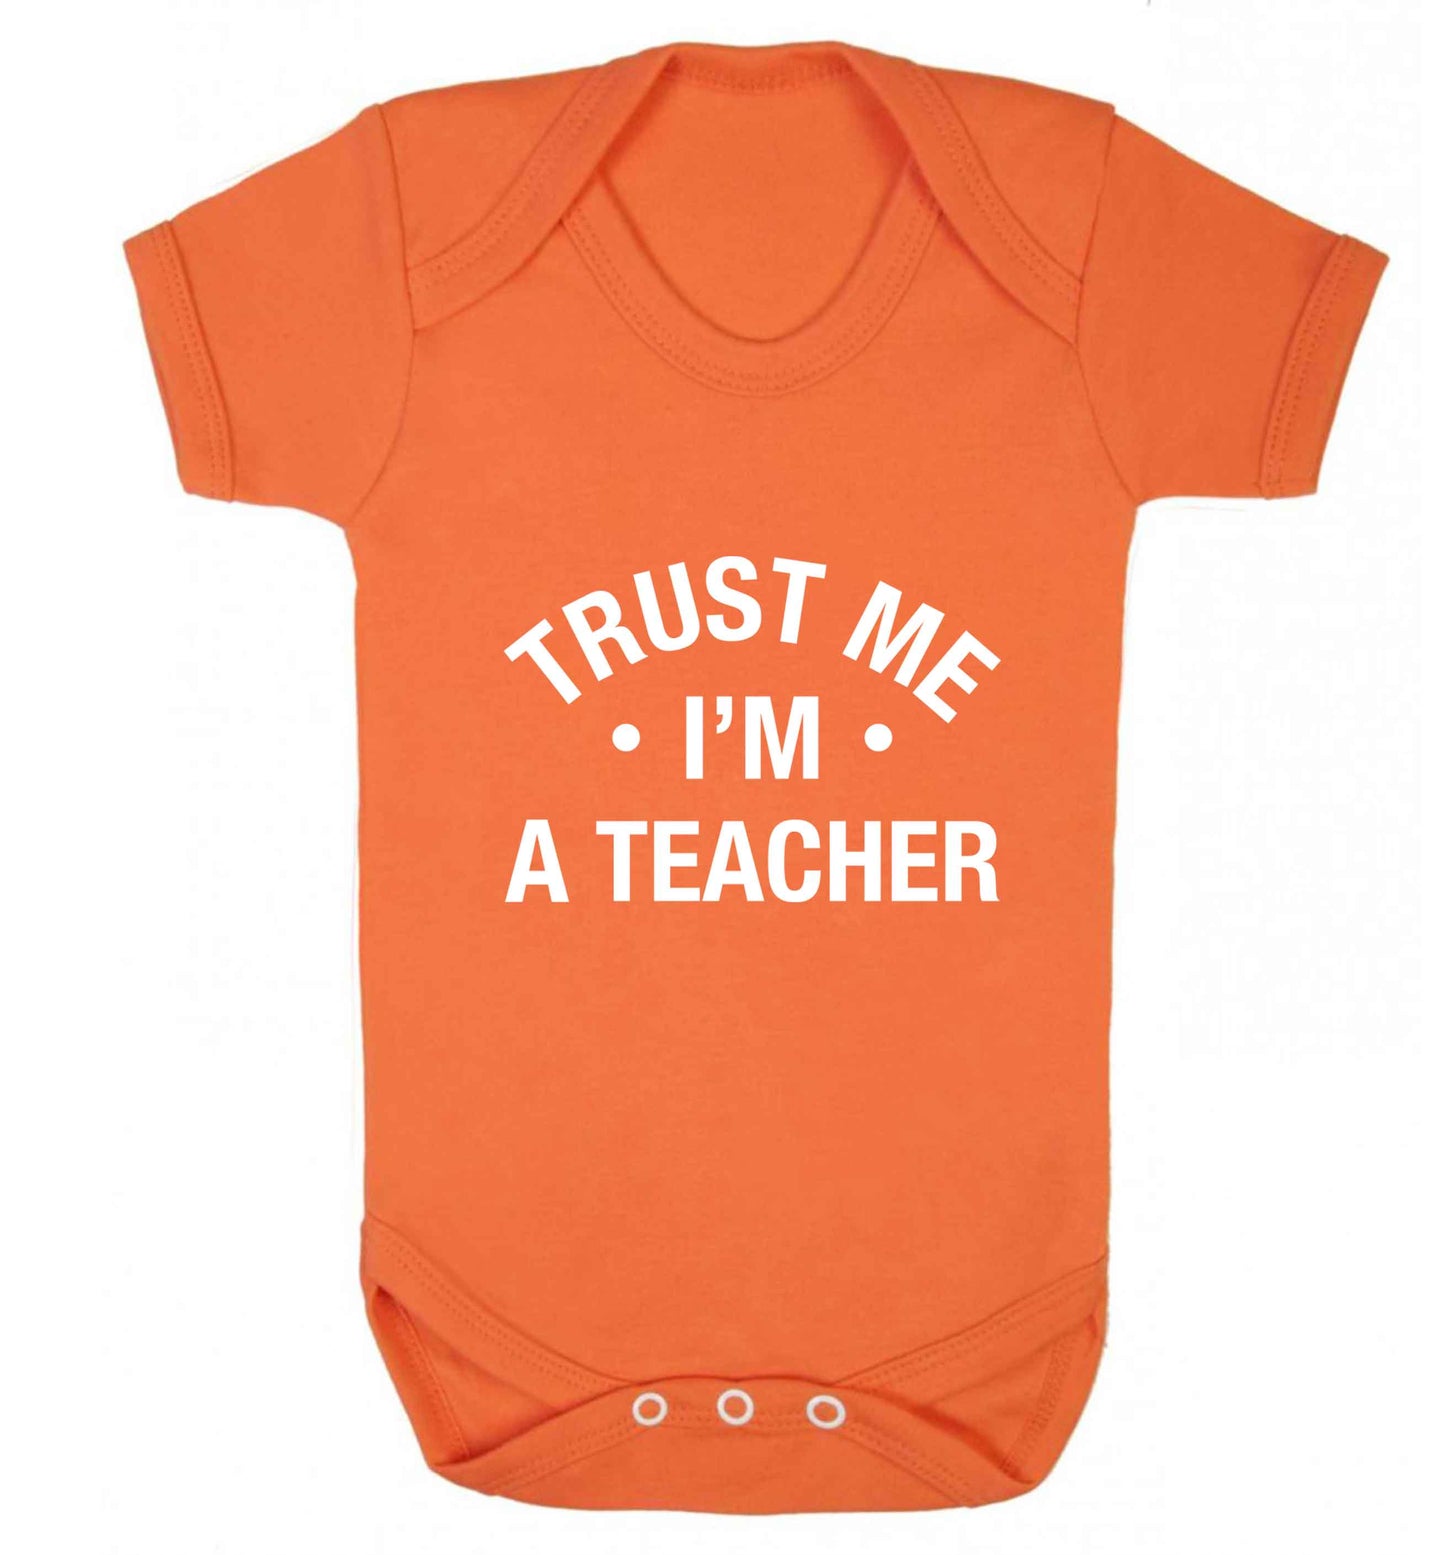 Trust me I'm a teacher baby vest orange 18-24 months